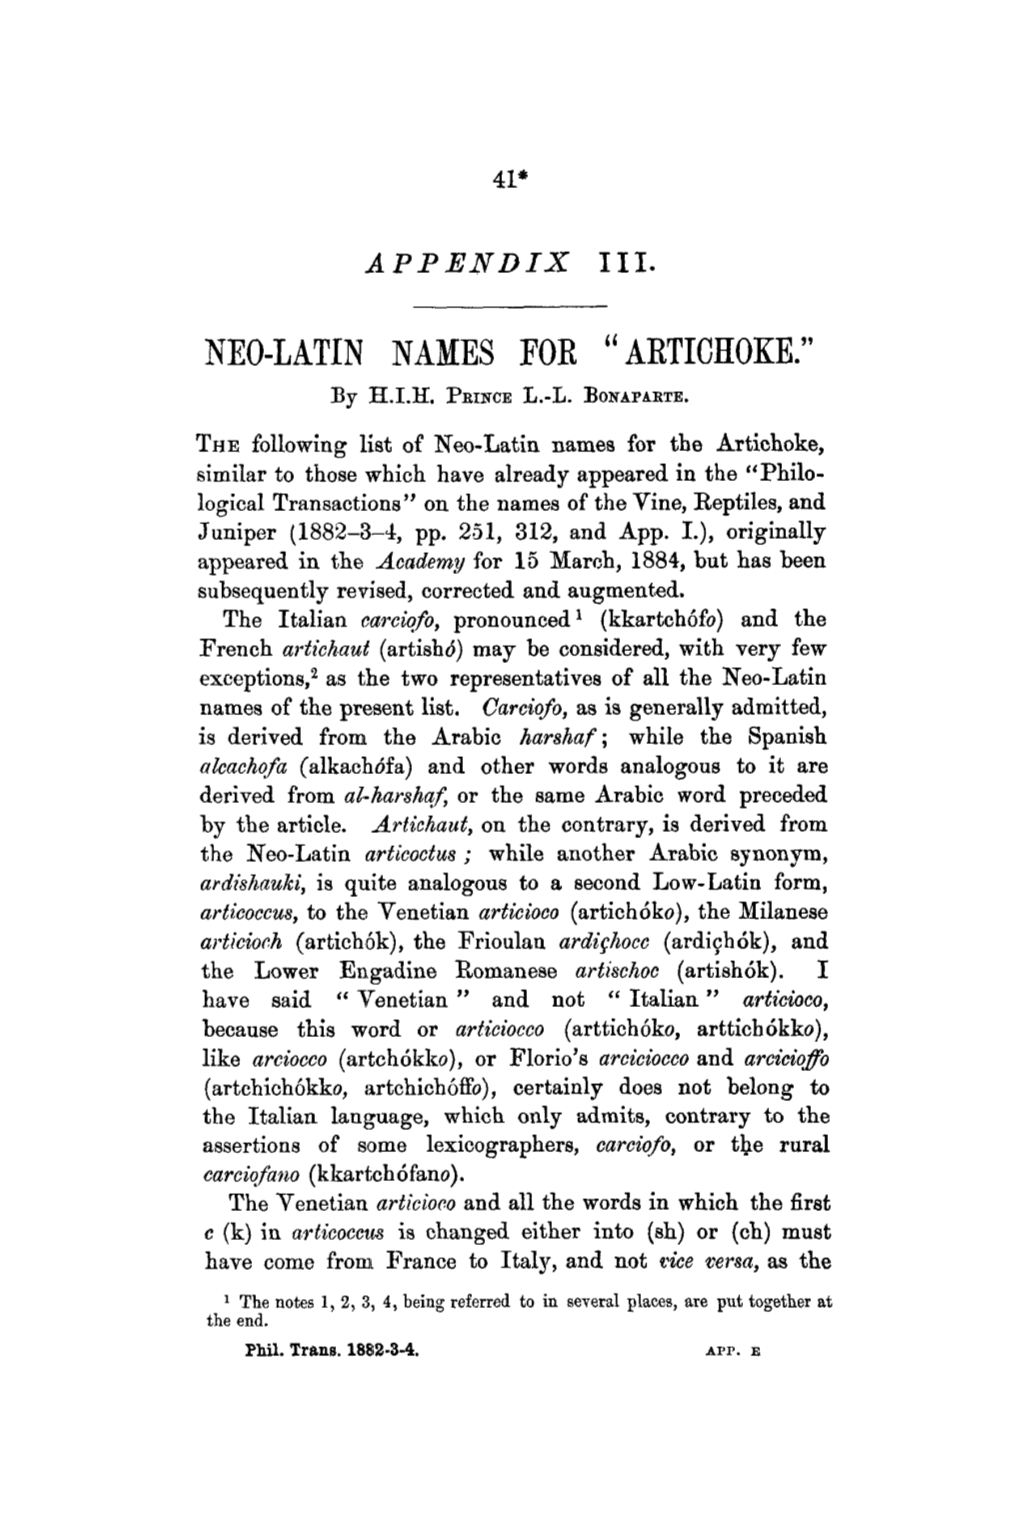 Neolatin Names for Artichoke